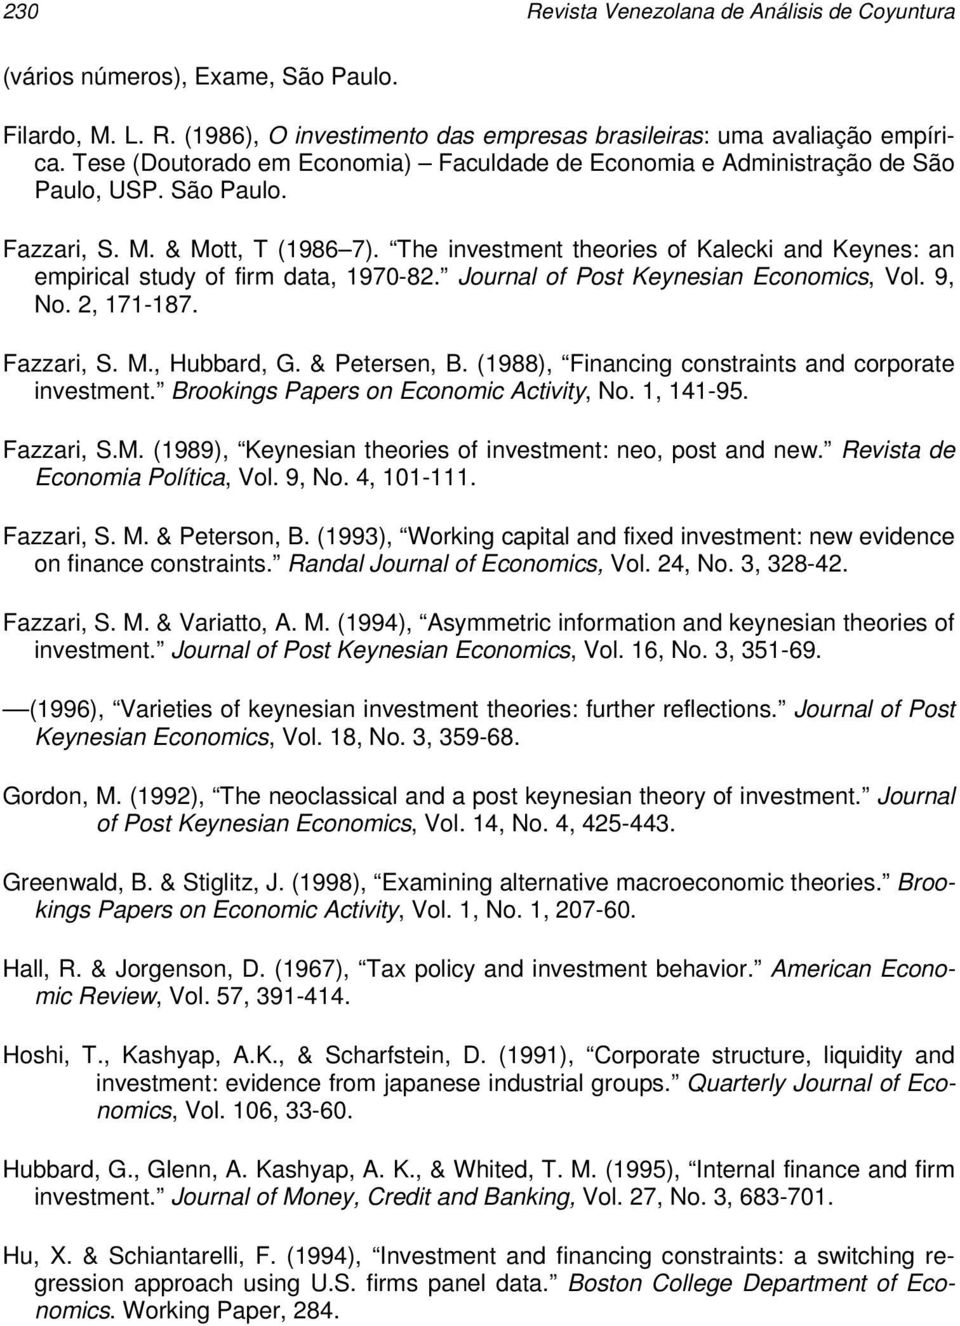 The investment theories of Kalecki and Keynes: an empirical study of firm data, 1970-82. Journal of Post Keynesian Economics, Vol. 9, No. 2, 171-187. Fazzari, S. M., Hubbard, G. & Petersen, B.